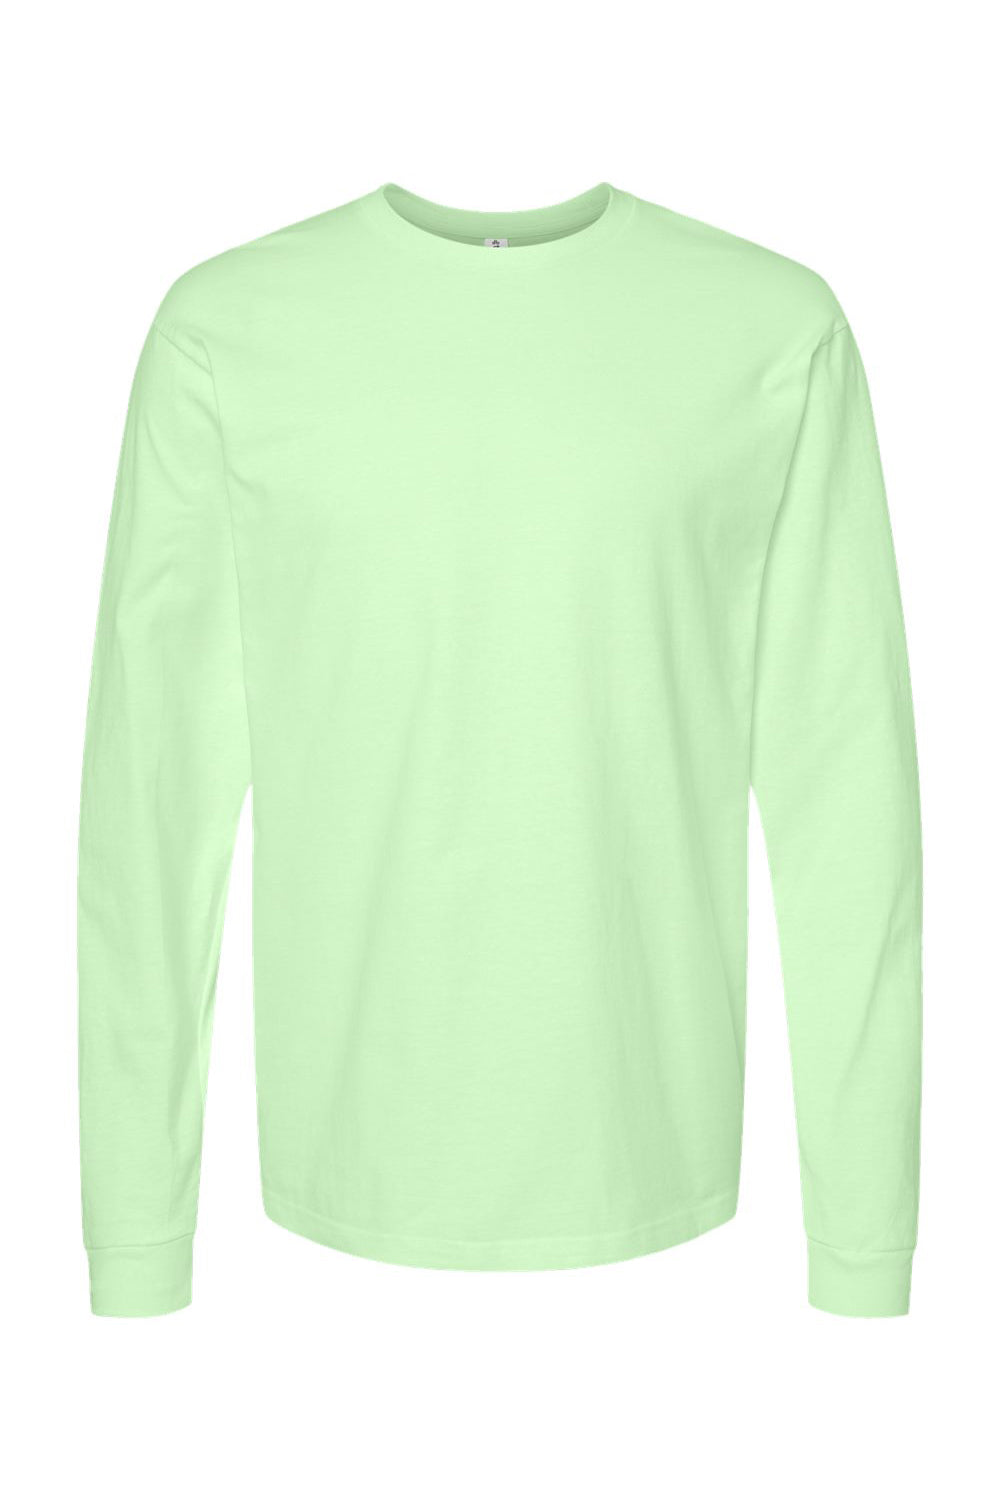 Tultex 291 Mens Jersey Long Sleeve Crewneck T-Shirt Neo Mint Green Flat Front